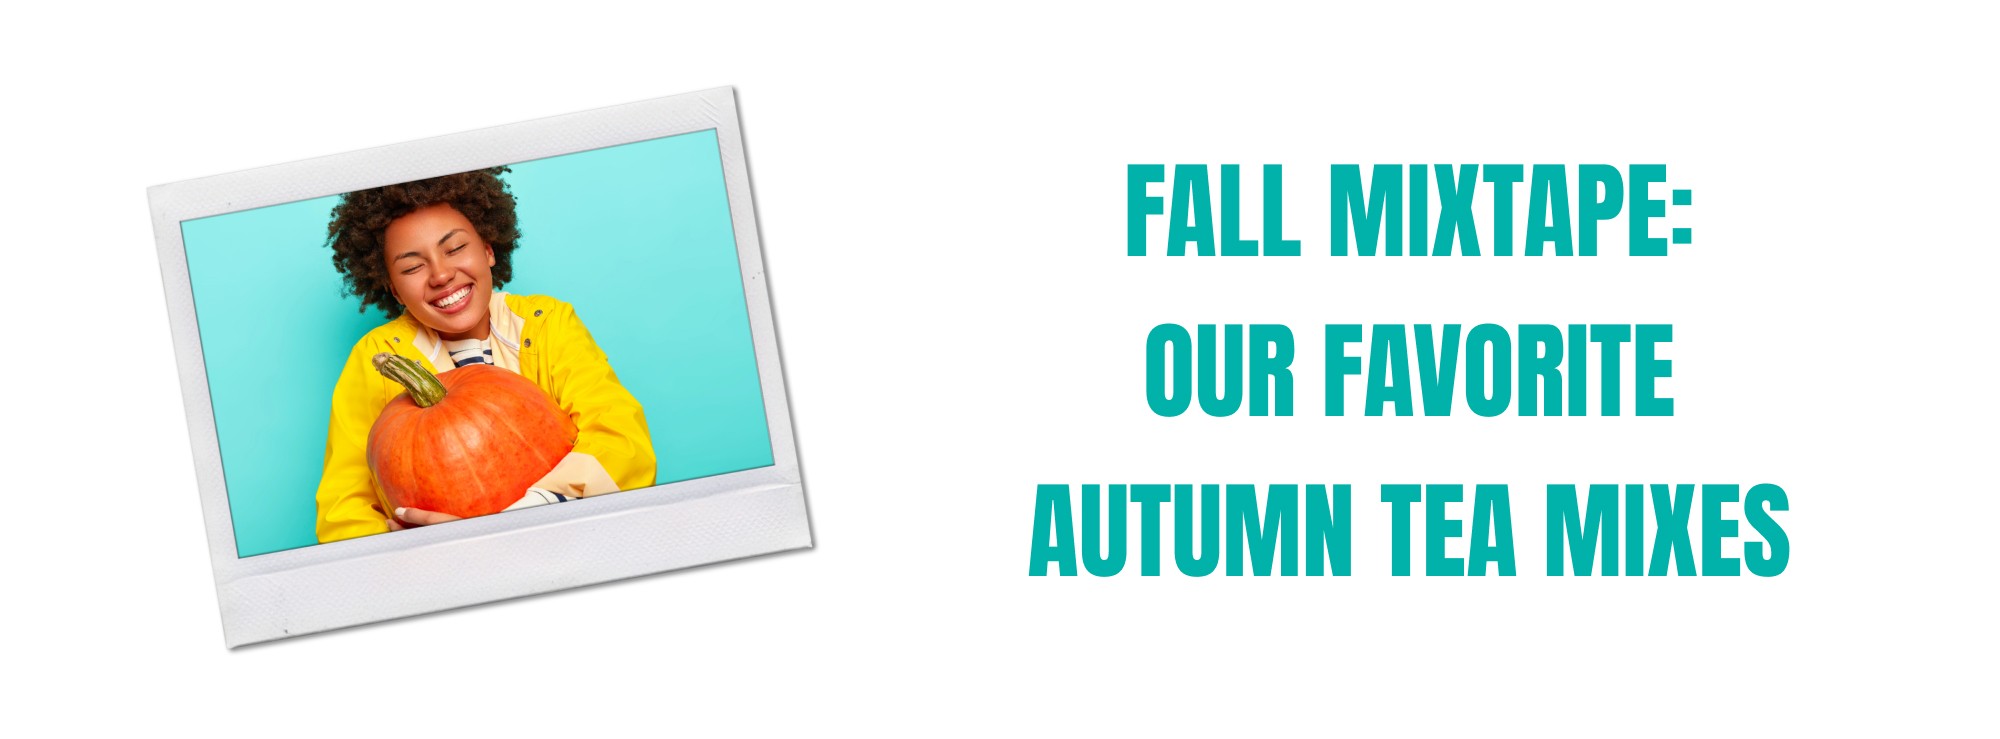 Fall Mixtape: Our Favorite Autumn Tea Mixes